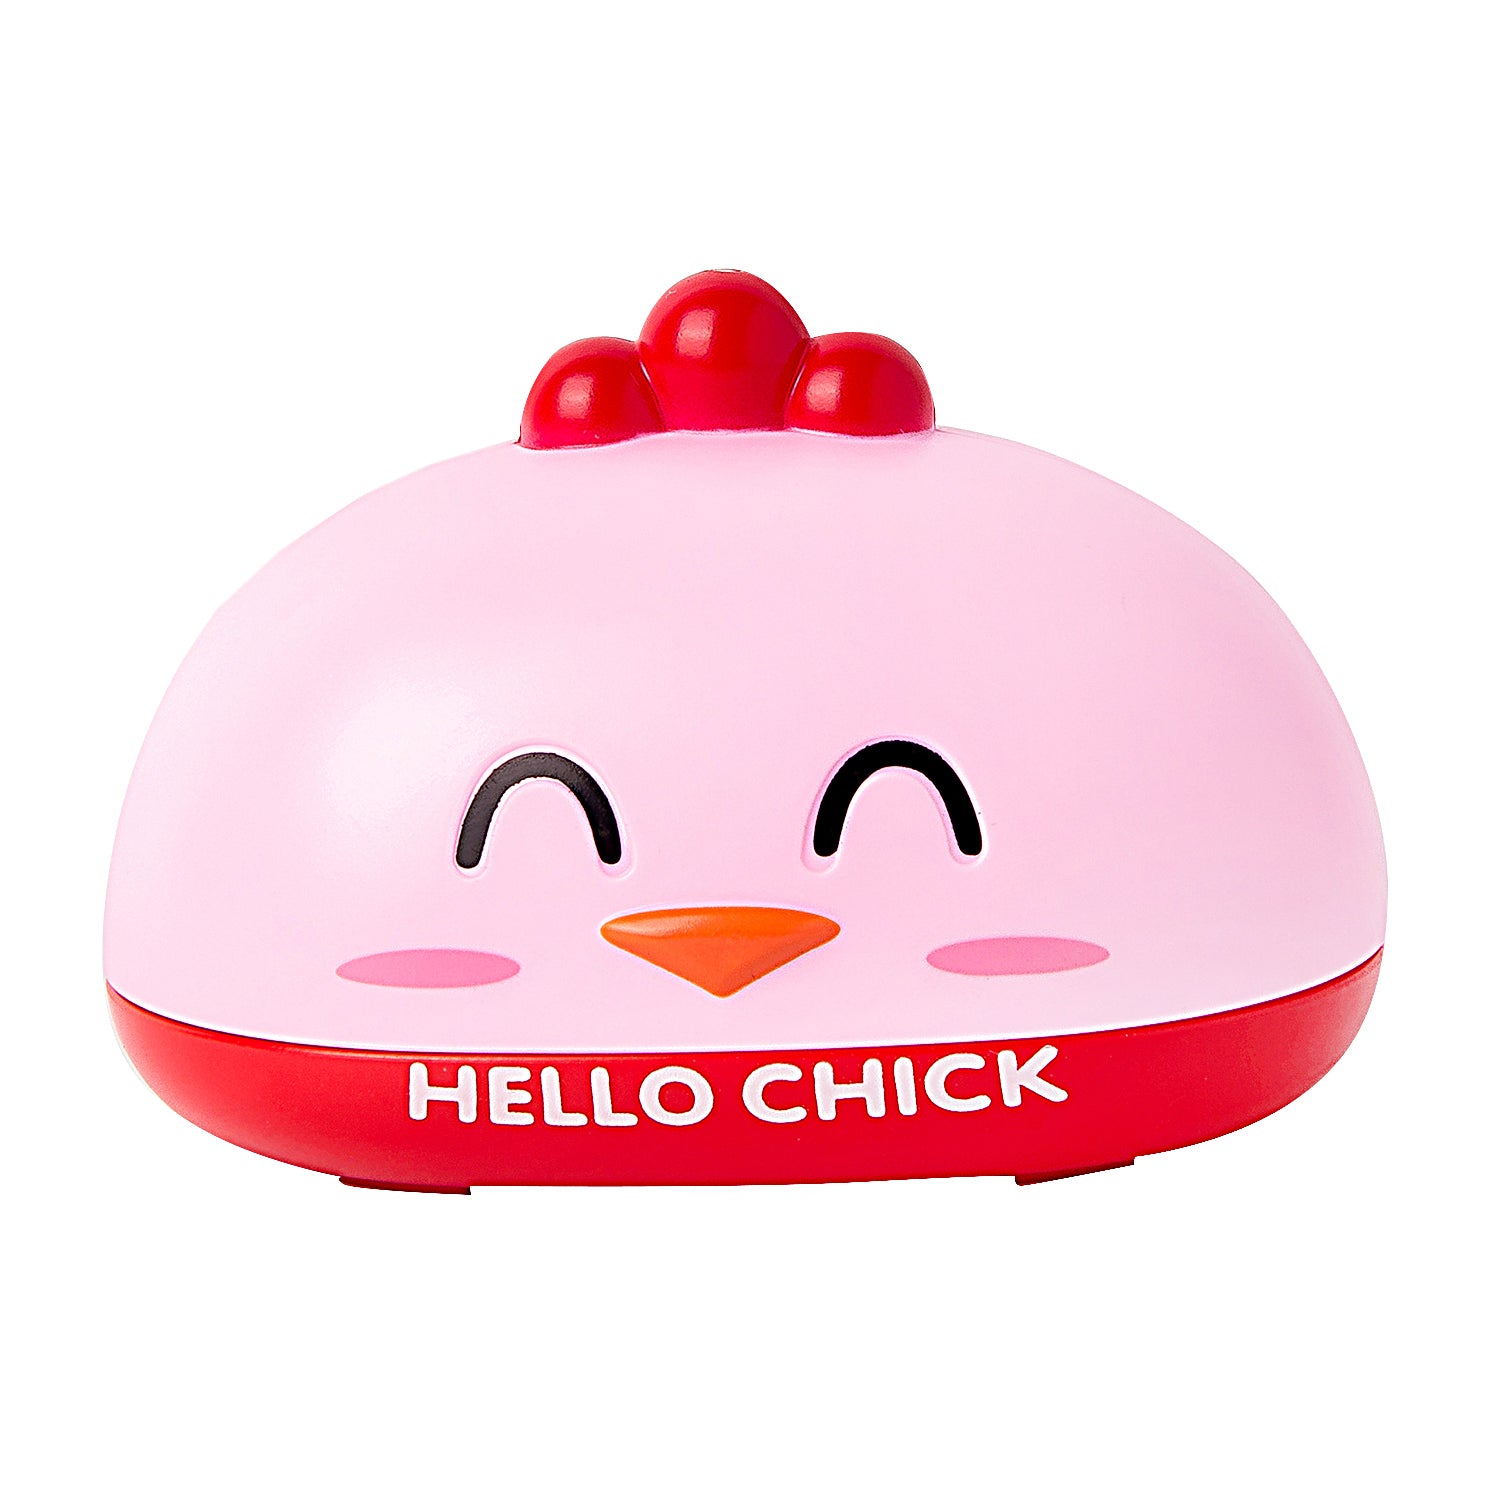 Chick Pink Soap Box